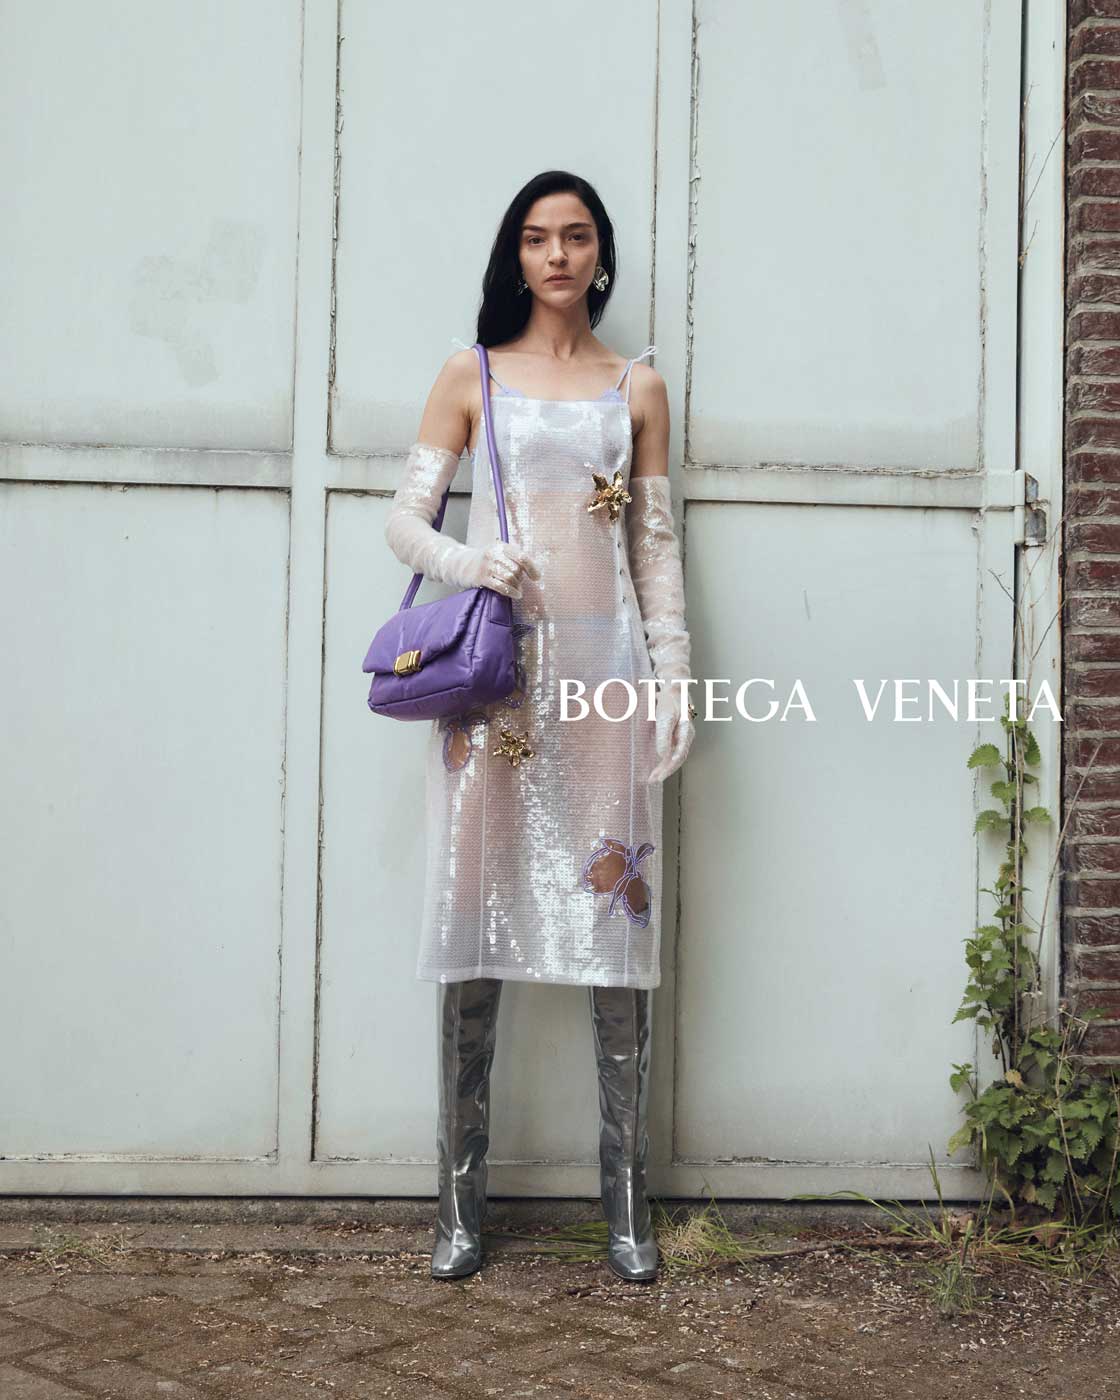 Bottega Veneta debuts the new winter campaign by Matthieu Blazy